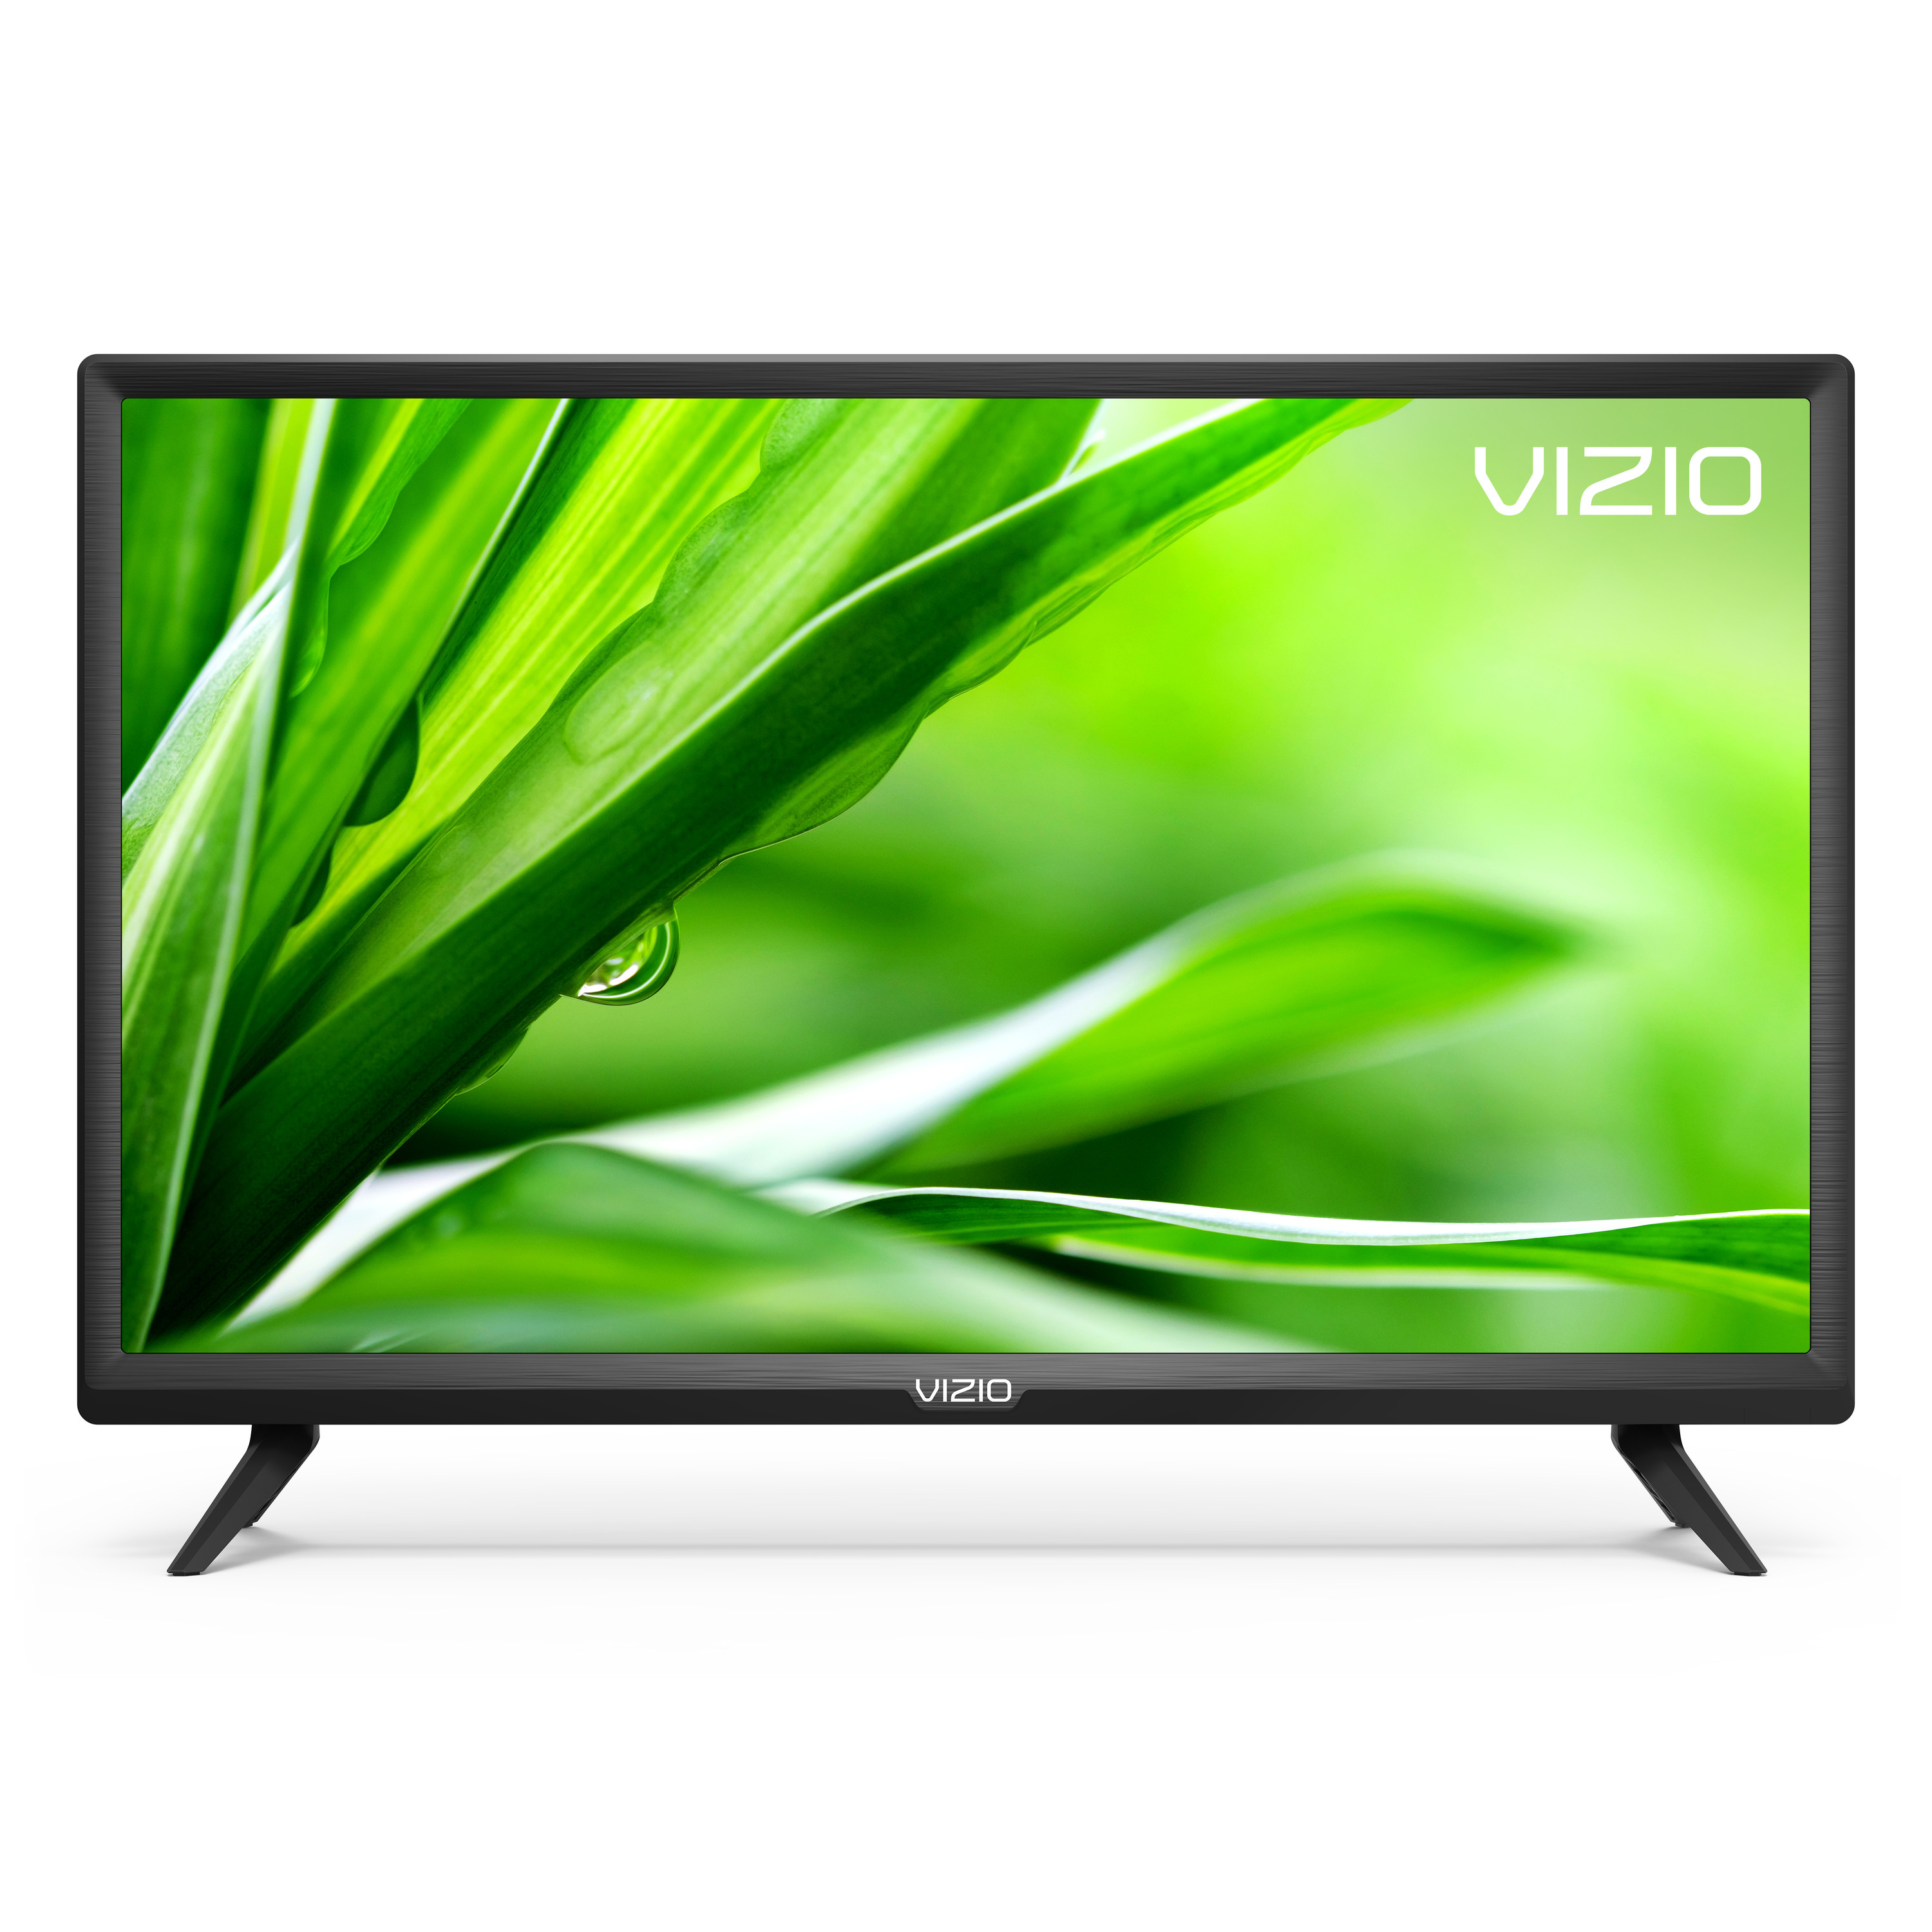 Vizio 24" Class HD LED TV D-Series D24hn-G9 - image 1 of 9